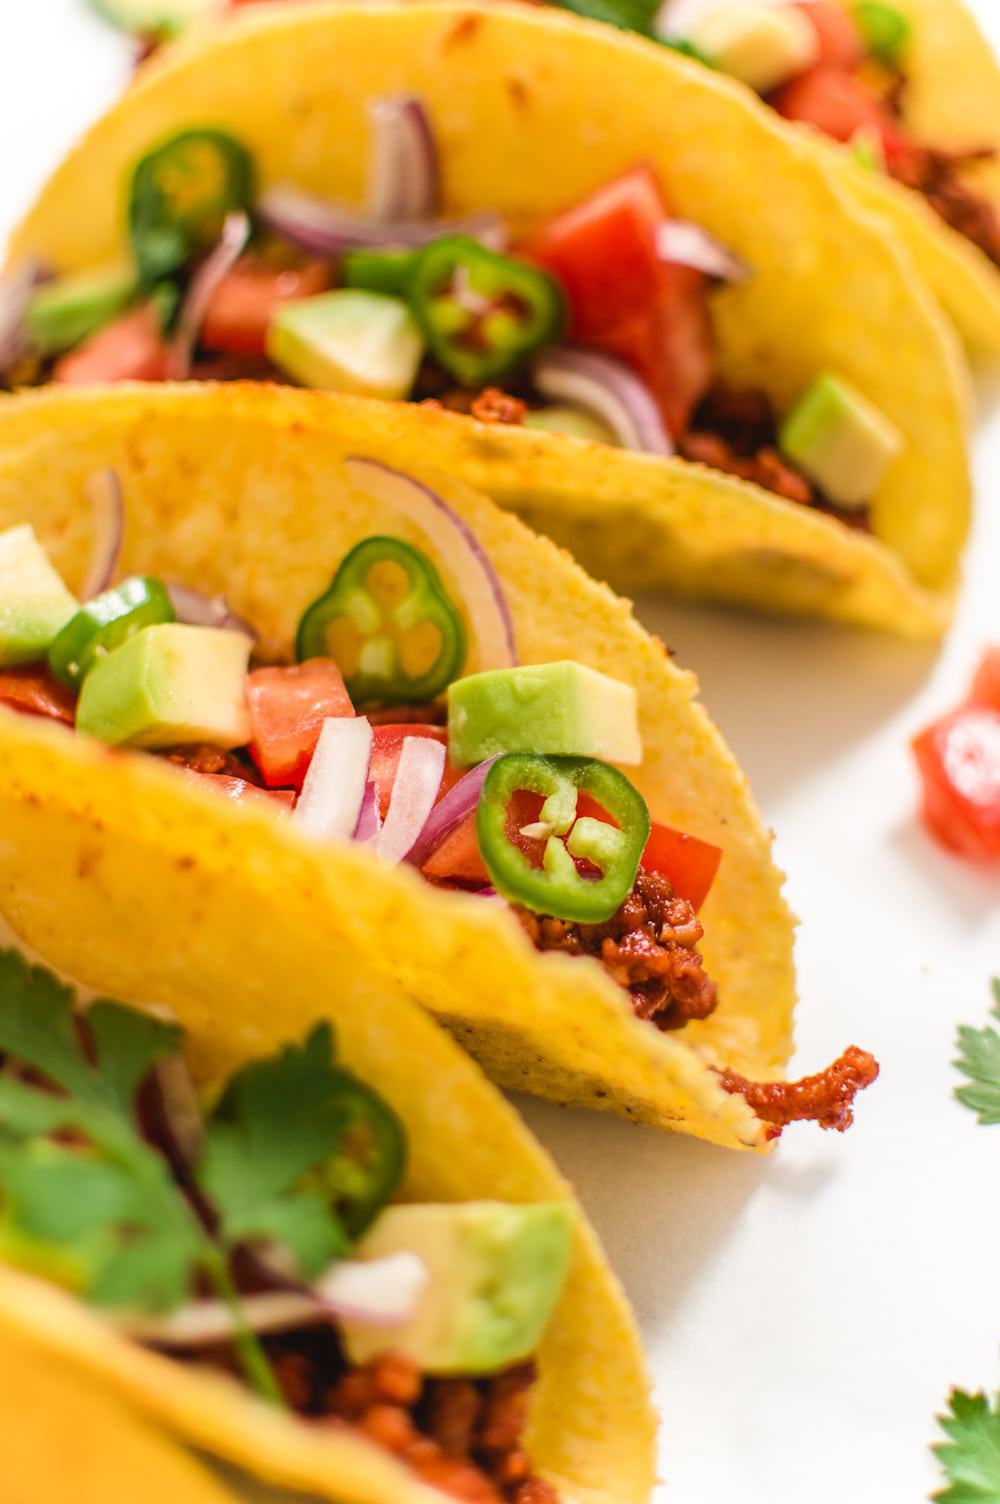 Beefy Lover's Vegan Tacos up close.